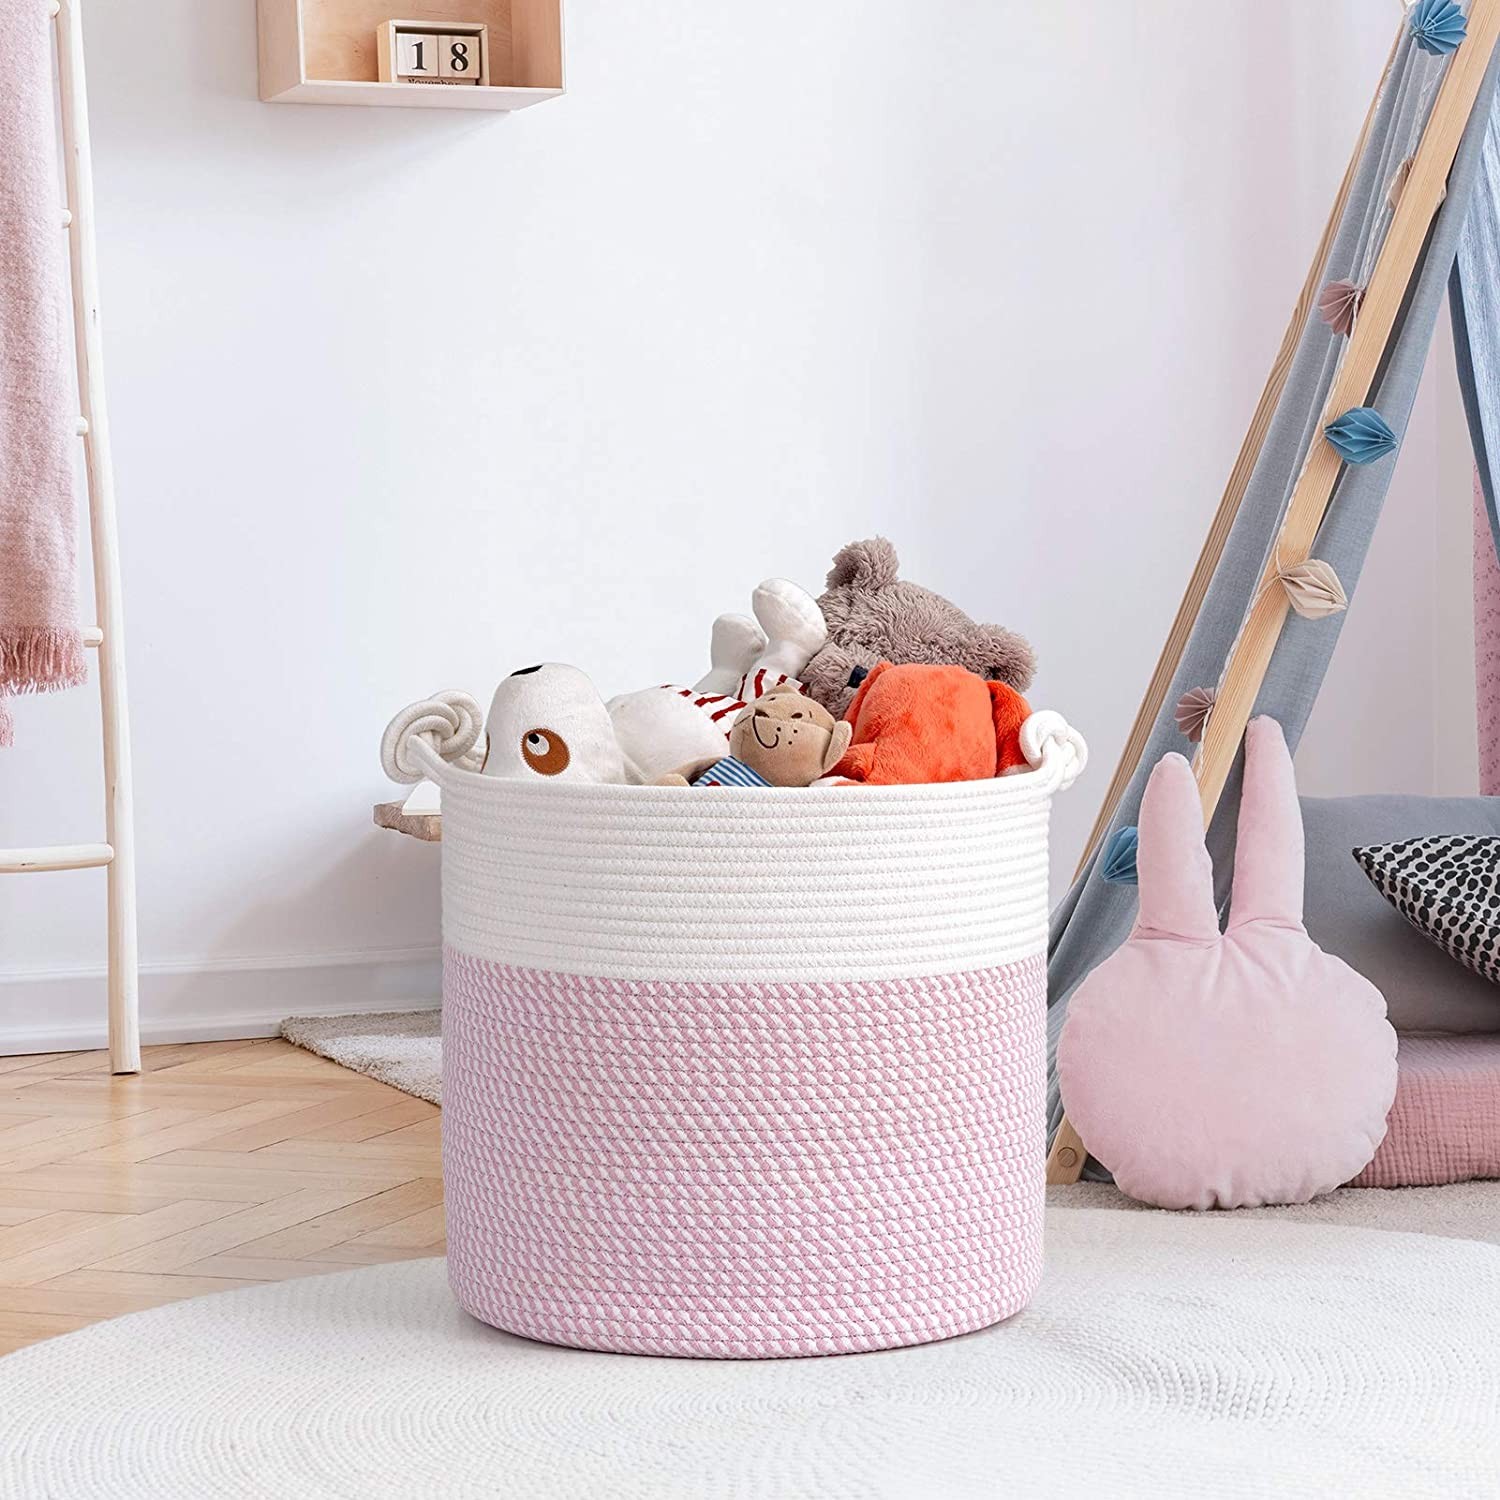 Bottom Toy Chest Soft INDRESSME Cotton Rope Basket Pink for Baby Nursery Room Woven Basket Cute Kids Laundry Hamper Blanket Basket 